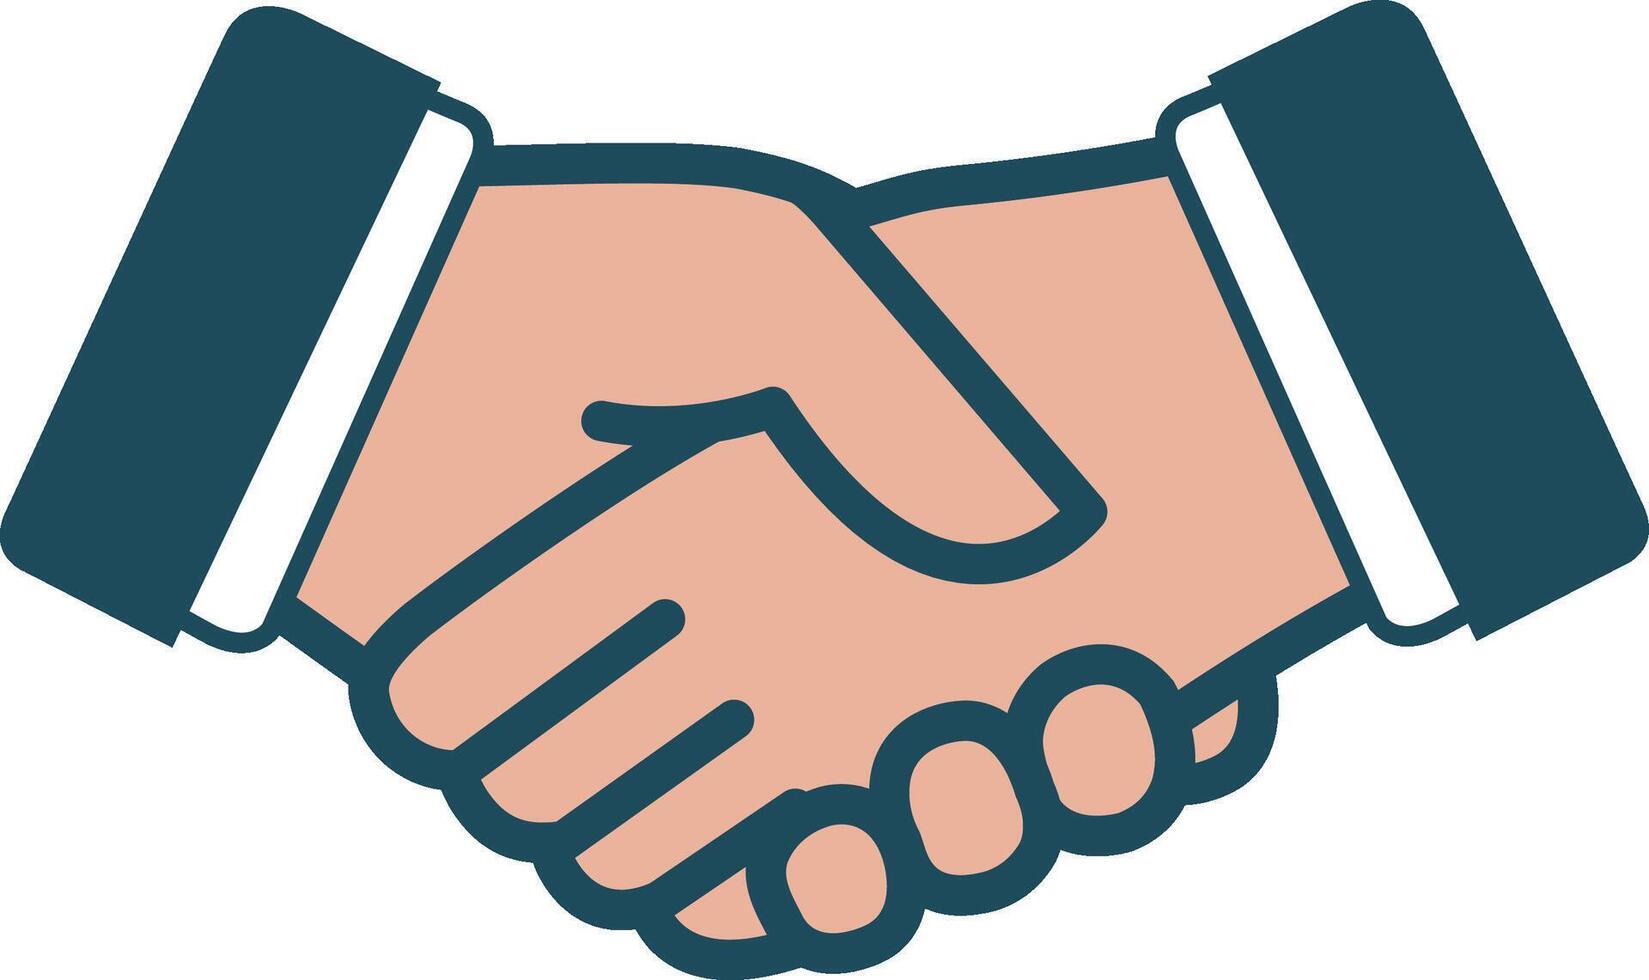 Business handshake. Business people shaking hands icon. vector